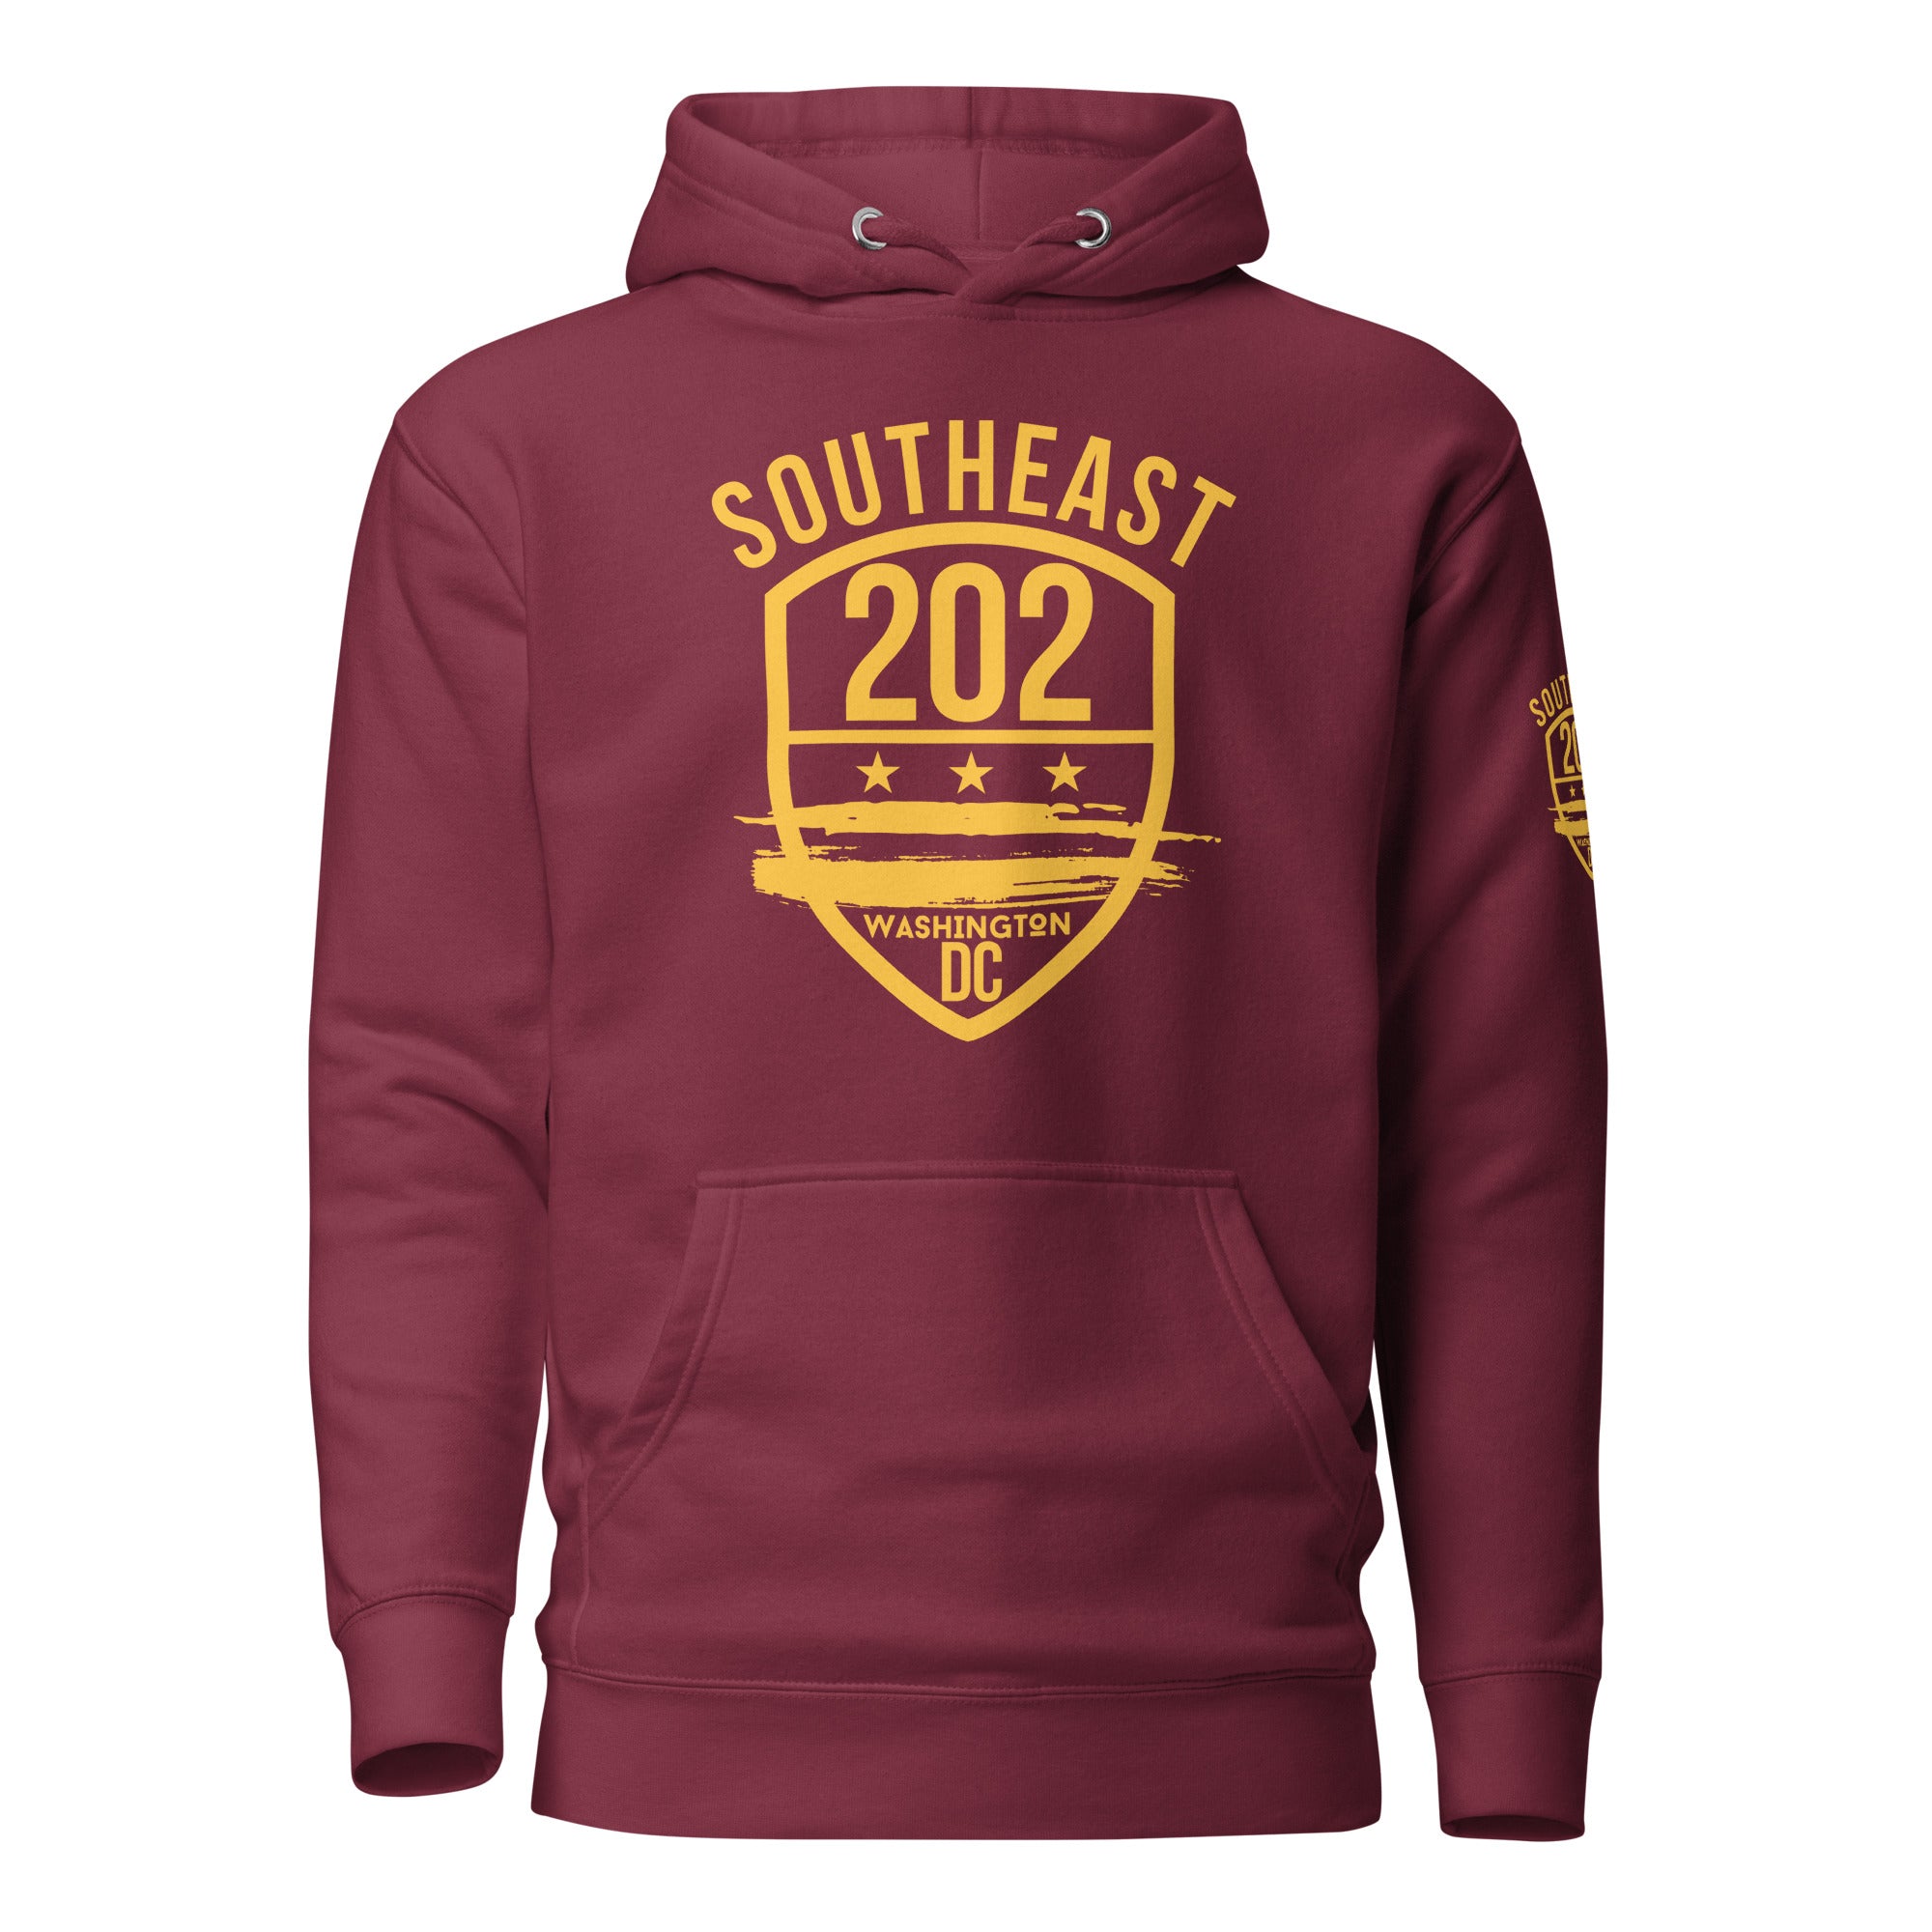 'SOUTHEAST WASHINGTON DC / 202' (Emblem-Southeast on RT Sleeve) - Maroon & Gold - %100 Cotton Unisex Hoodie